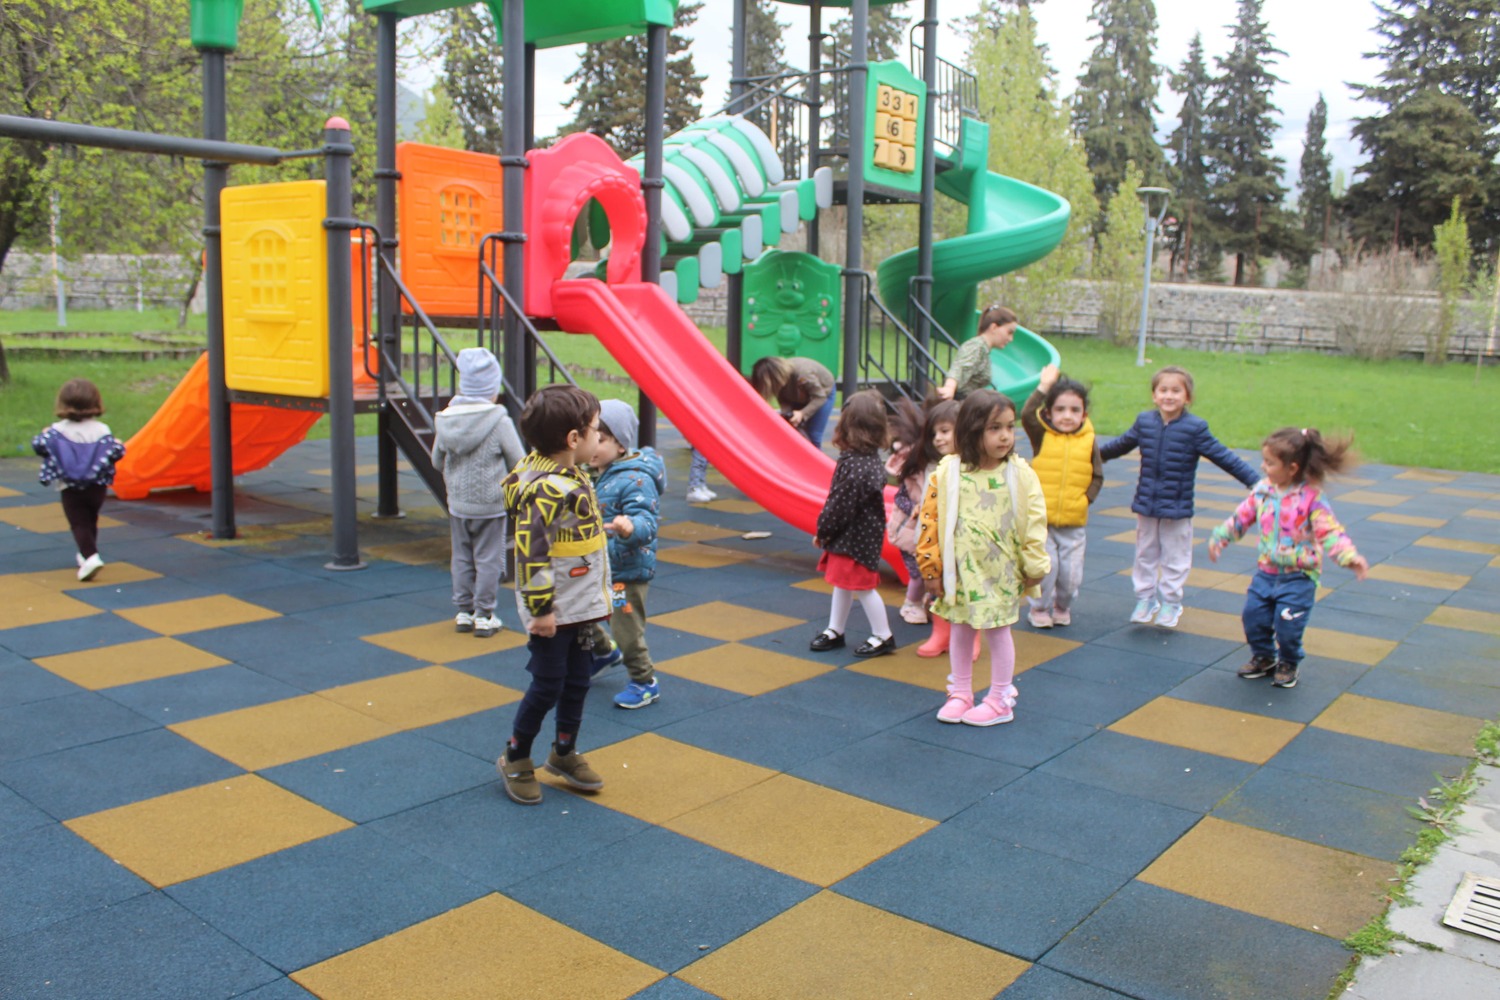 Playground for kids